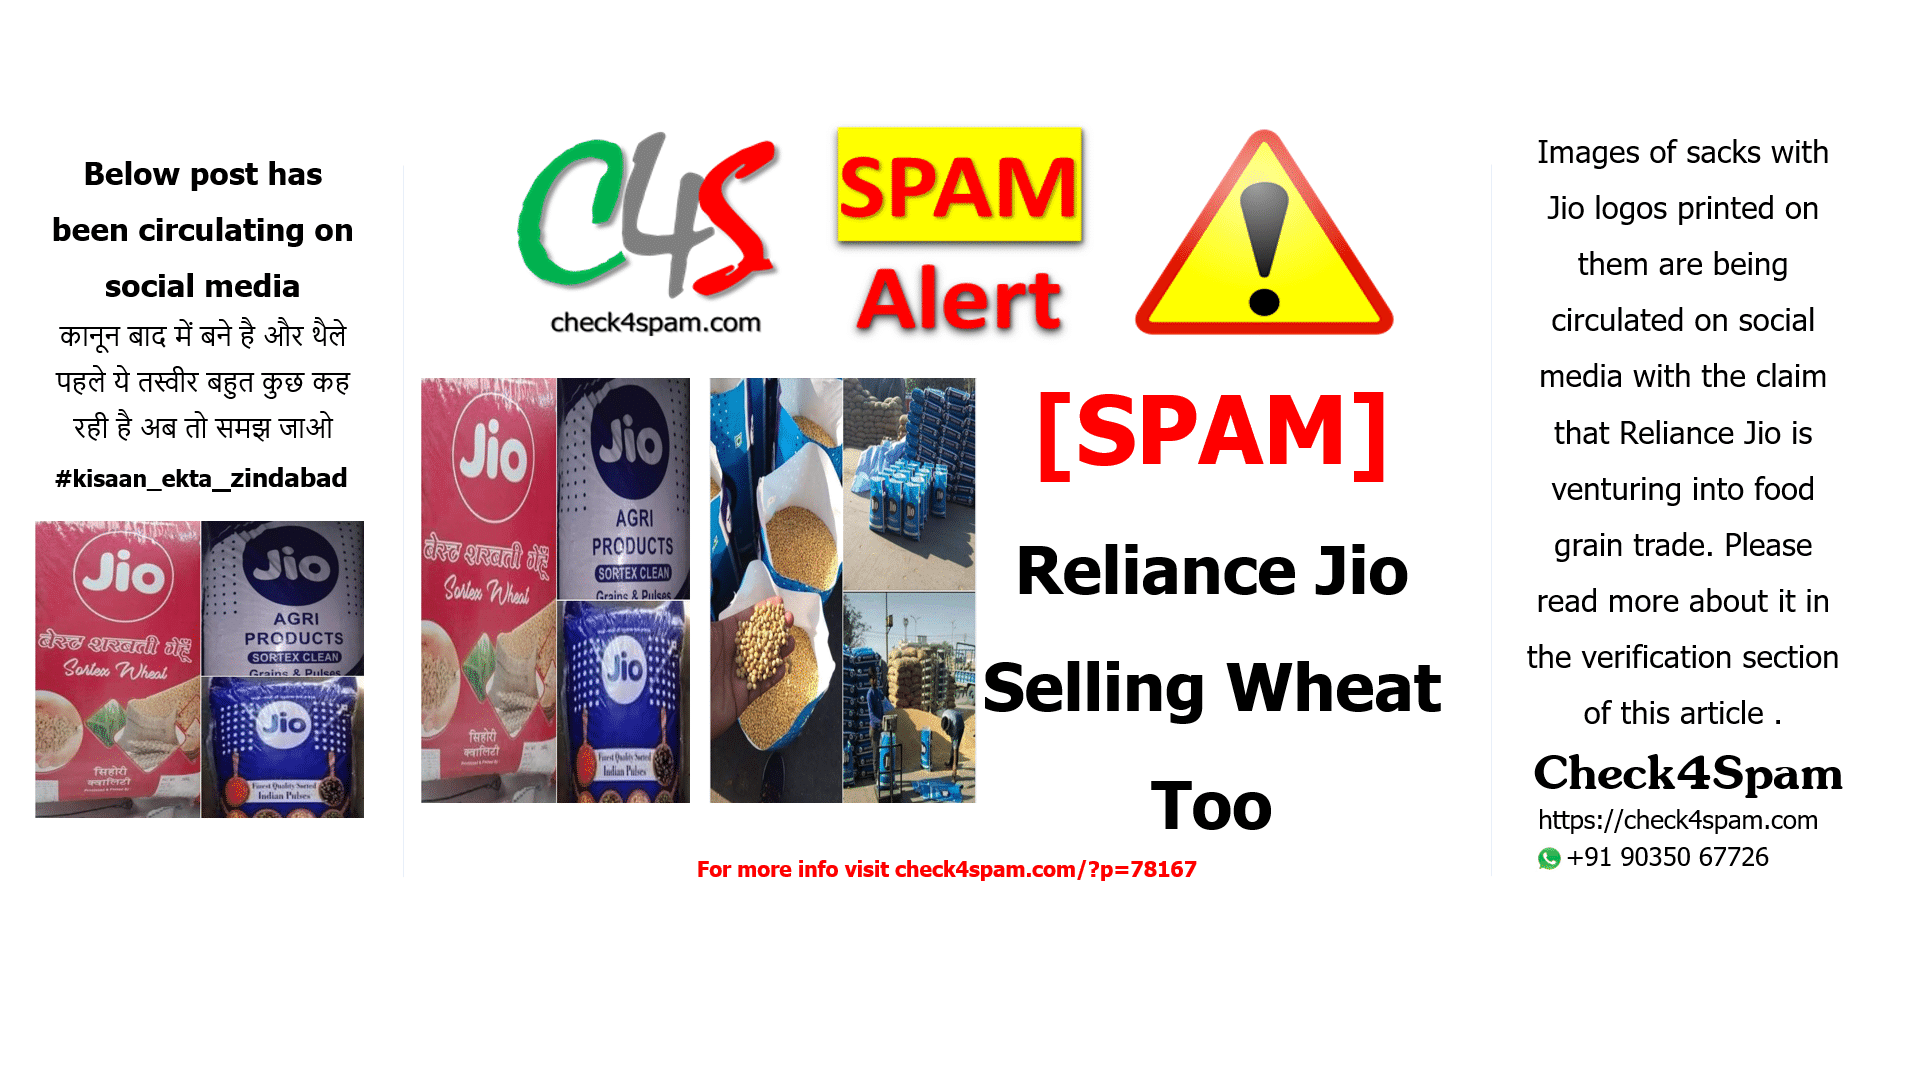 Reliance Jio Selling Wheat Too